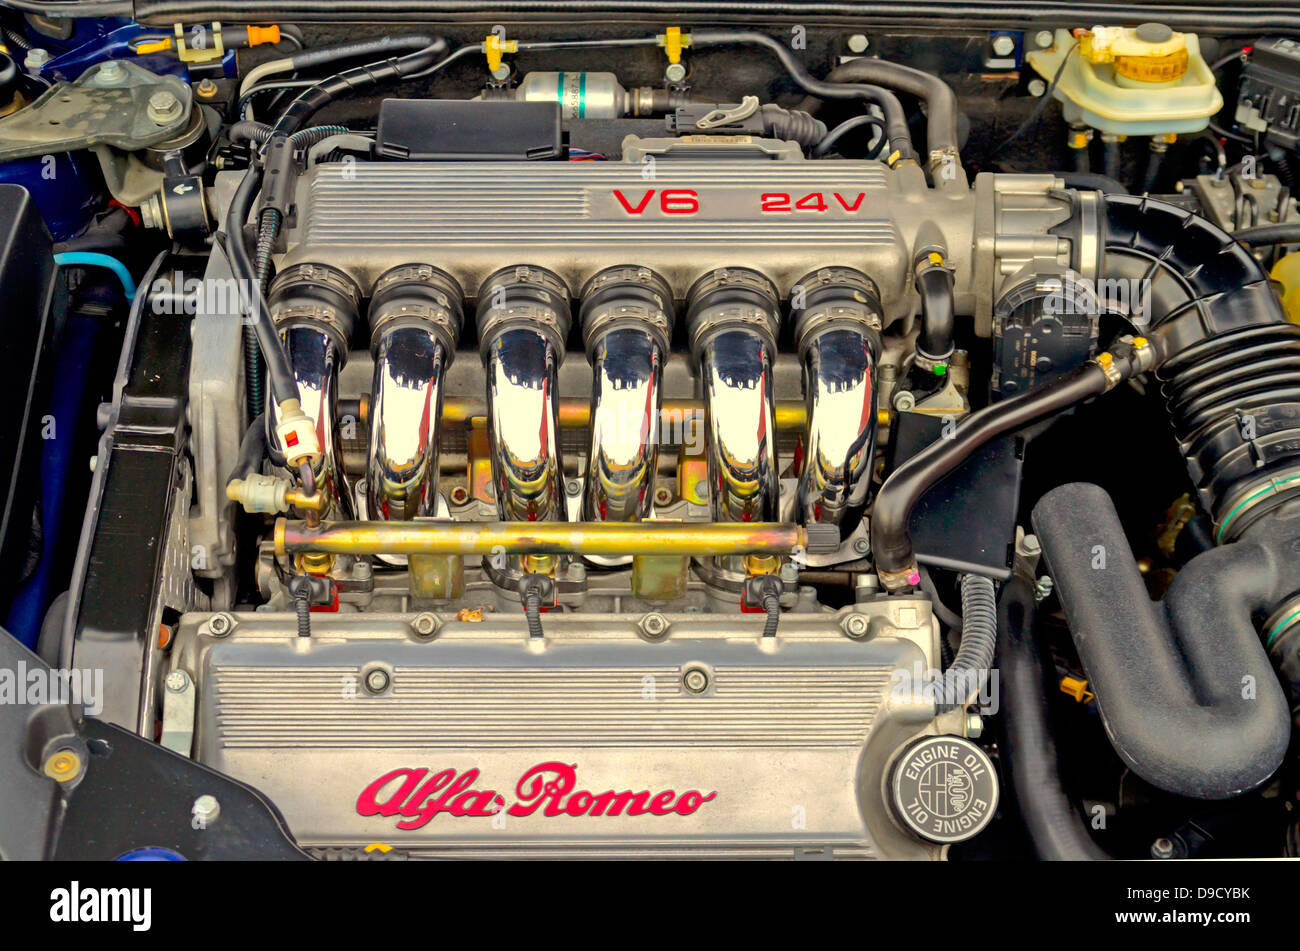 Alfa Romeo V6 motor 3 litros de 24 válvulas Foto de stock